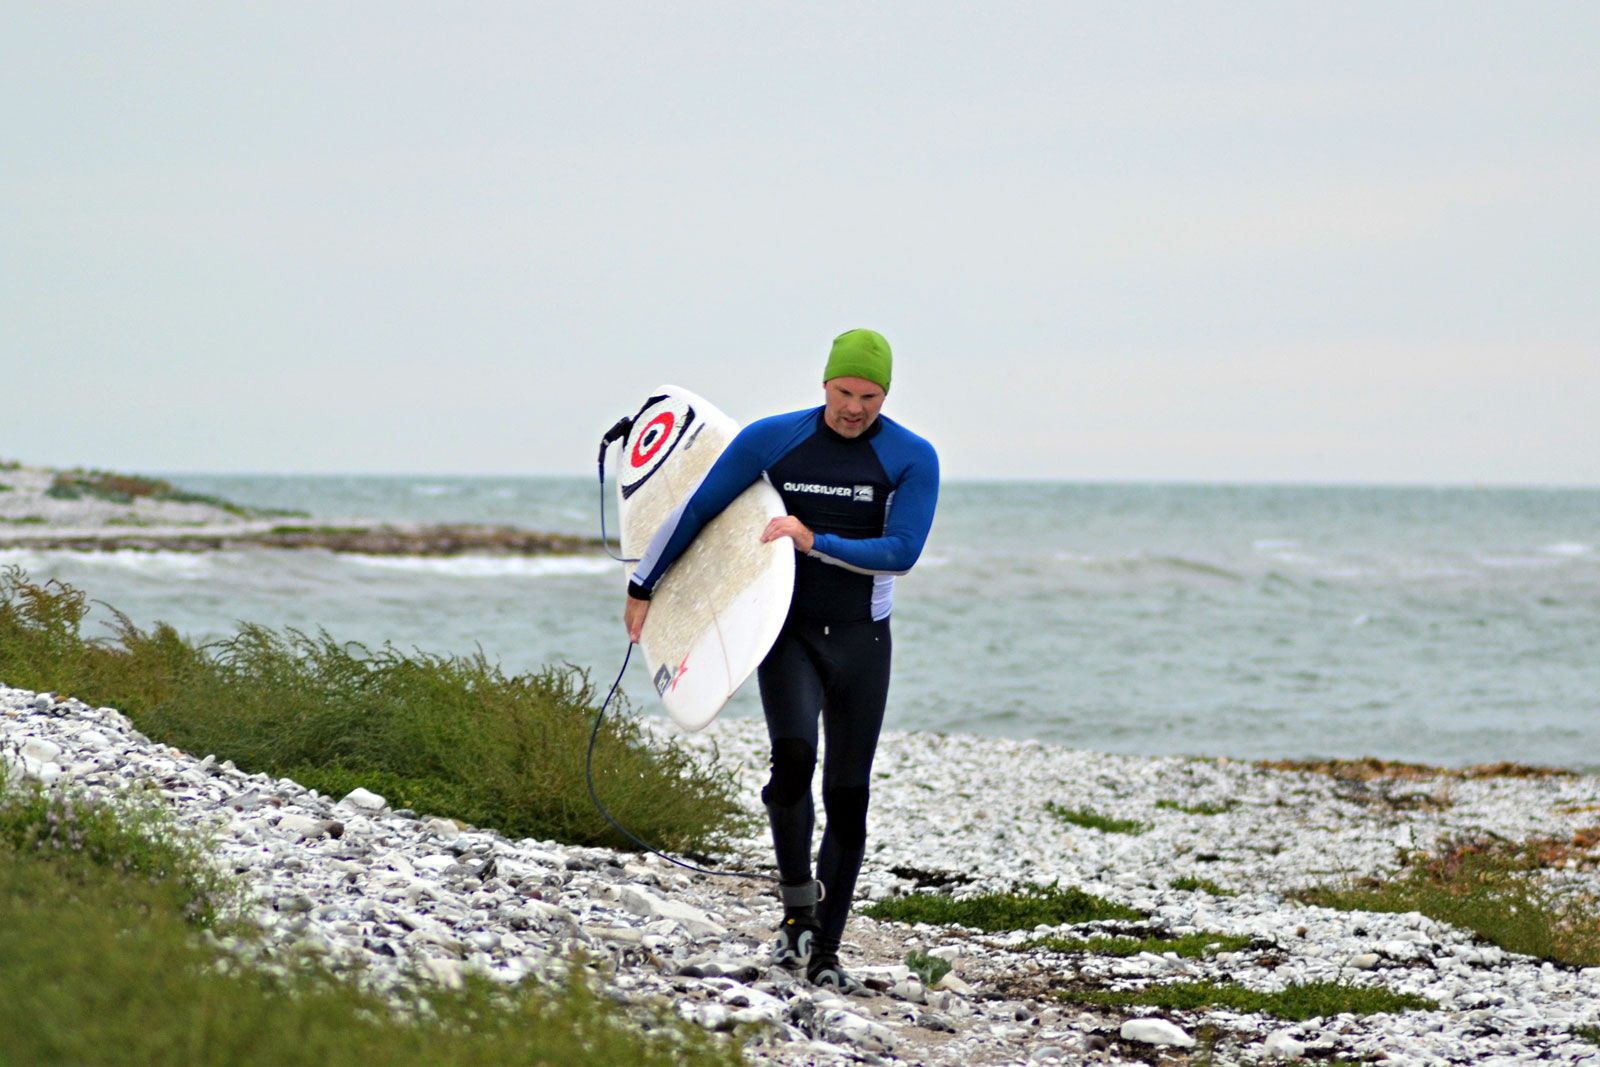 Flo Jung Wave Camp Dänemark: Philipp Grzybowski berichtet Alex